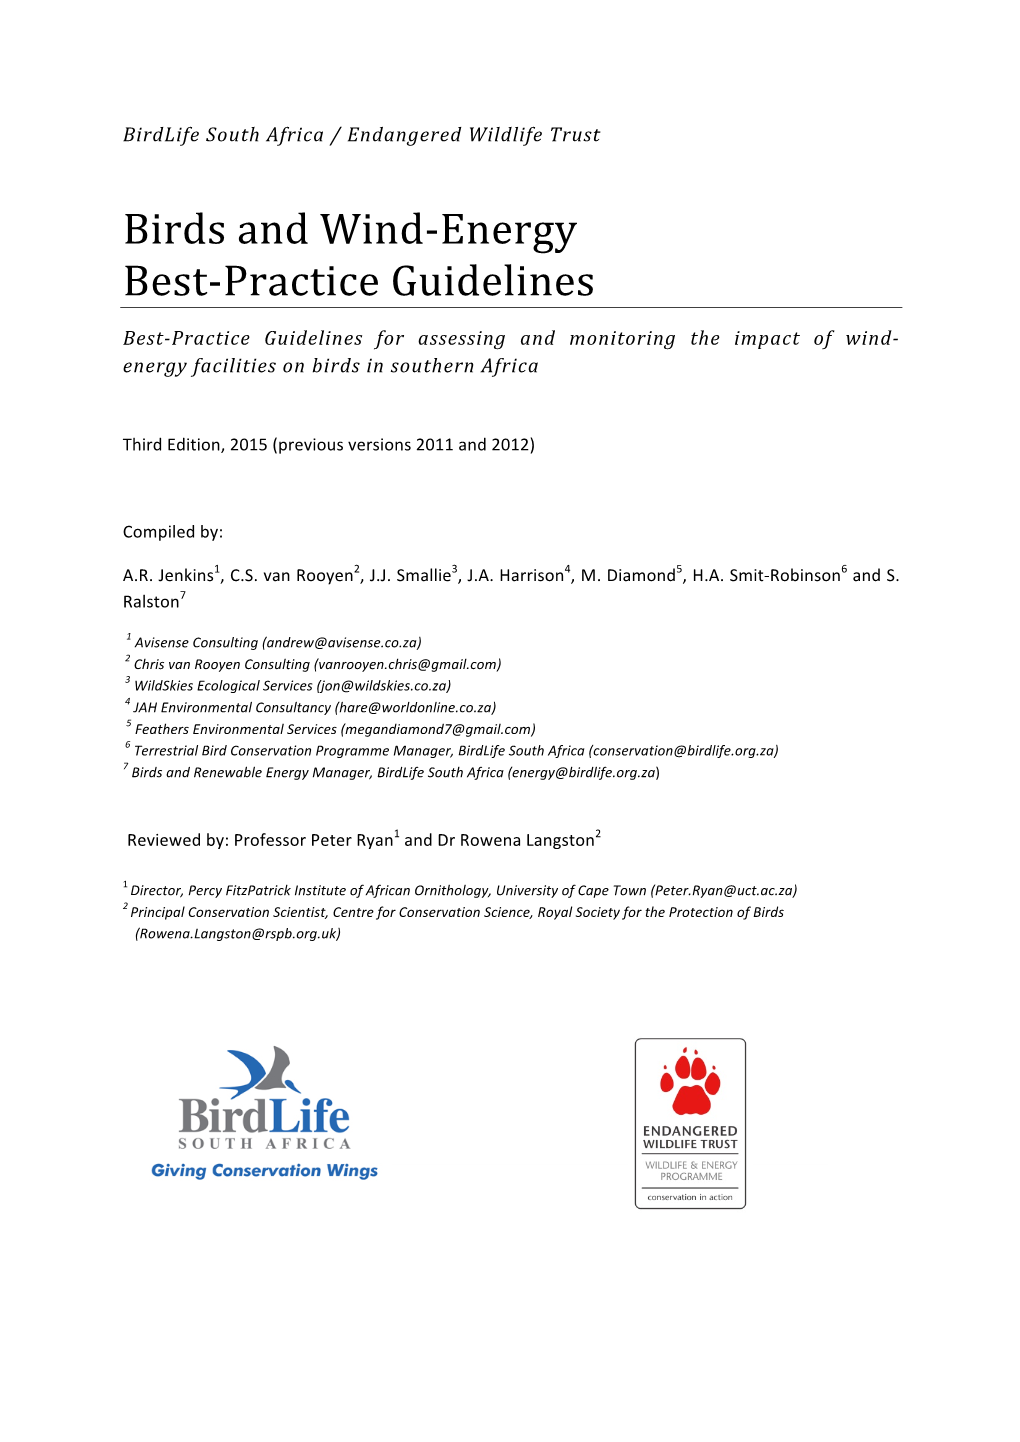 Birds and Wind-Energy Best-Practice Guidelines